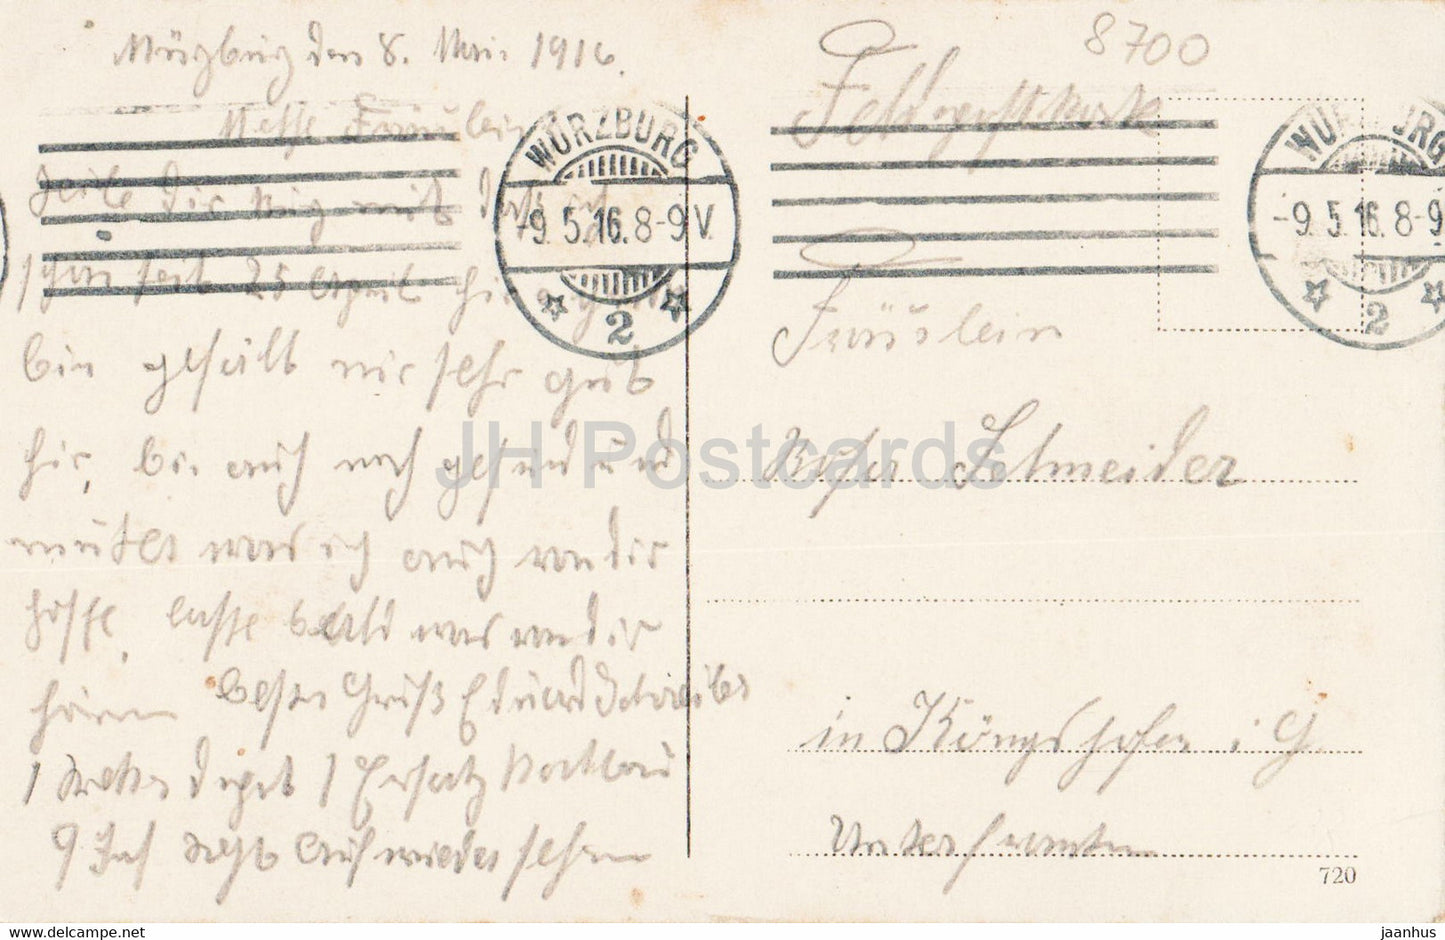 Wurzburg - Alte Mainbrucke - bridge - Feldpost - military mail - old postcard - 1916 - Germany - used